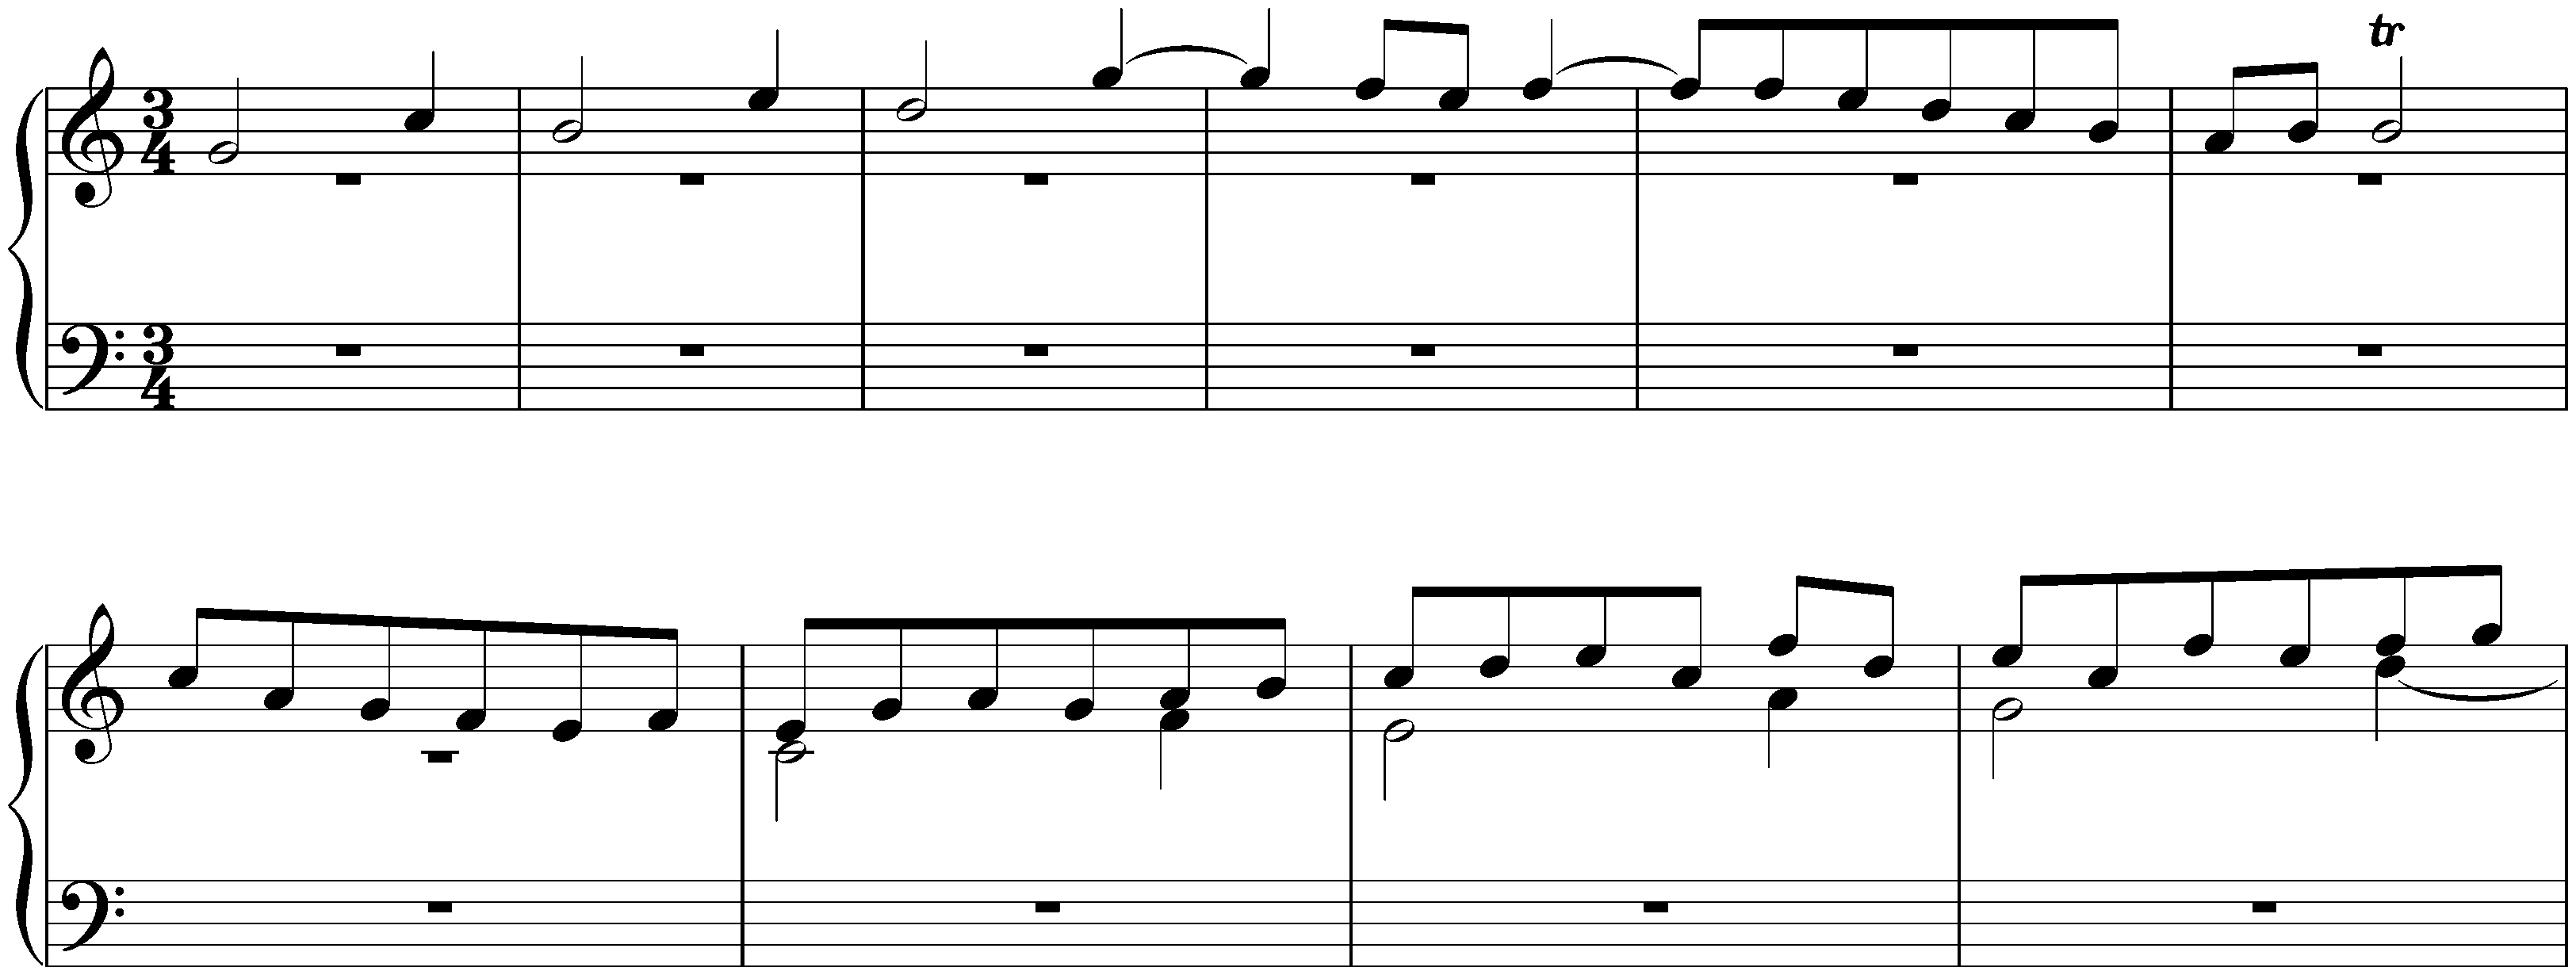 Fugue in C major, BWV Anh. 89